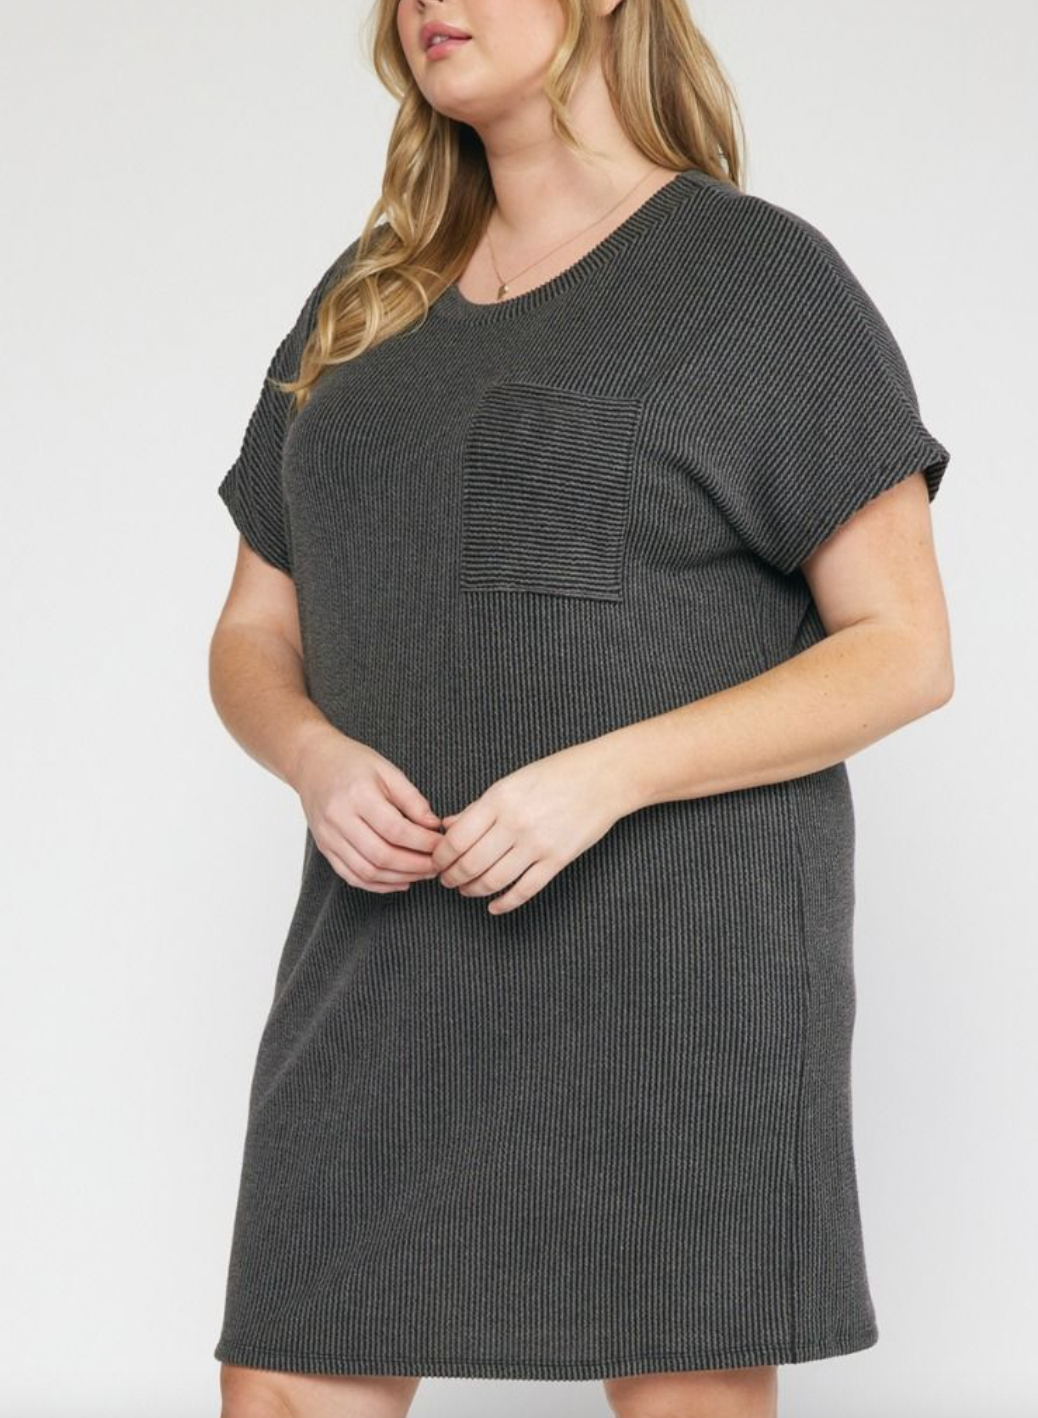 Charcoal Ribbed Knit T Shirt Dress (XL-2X)